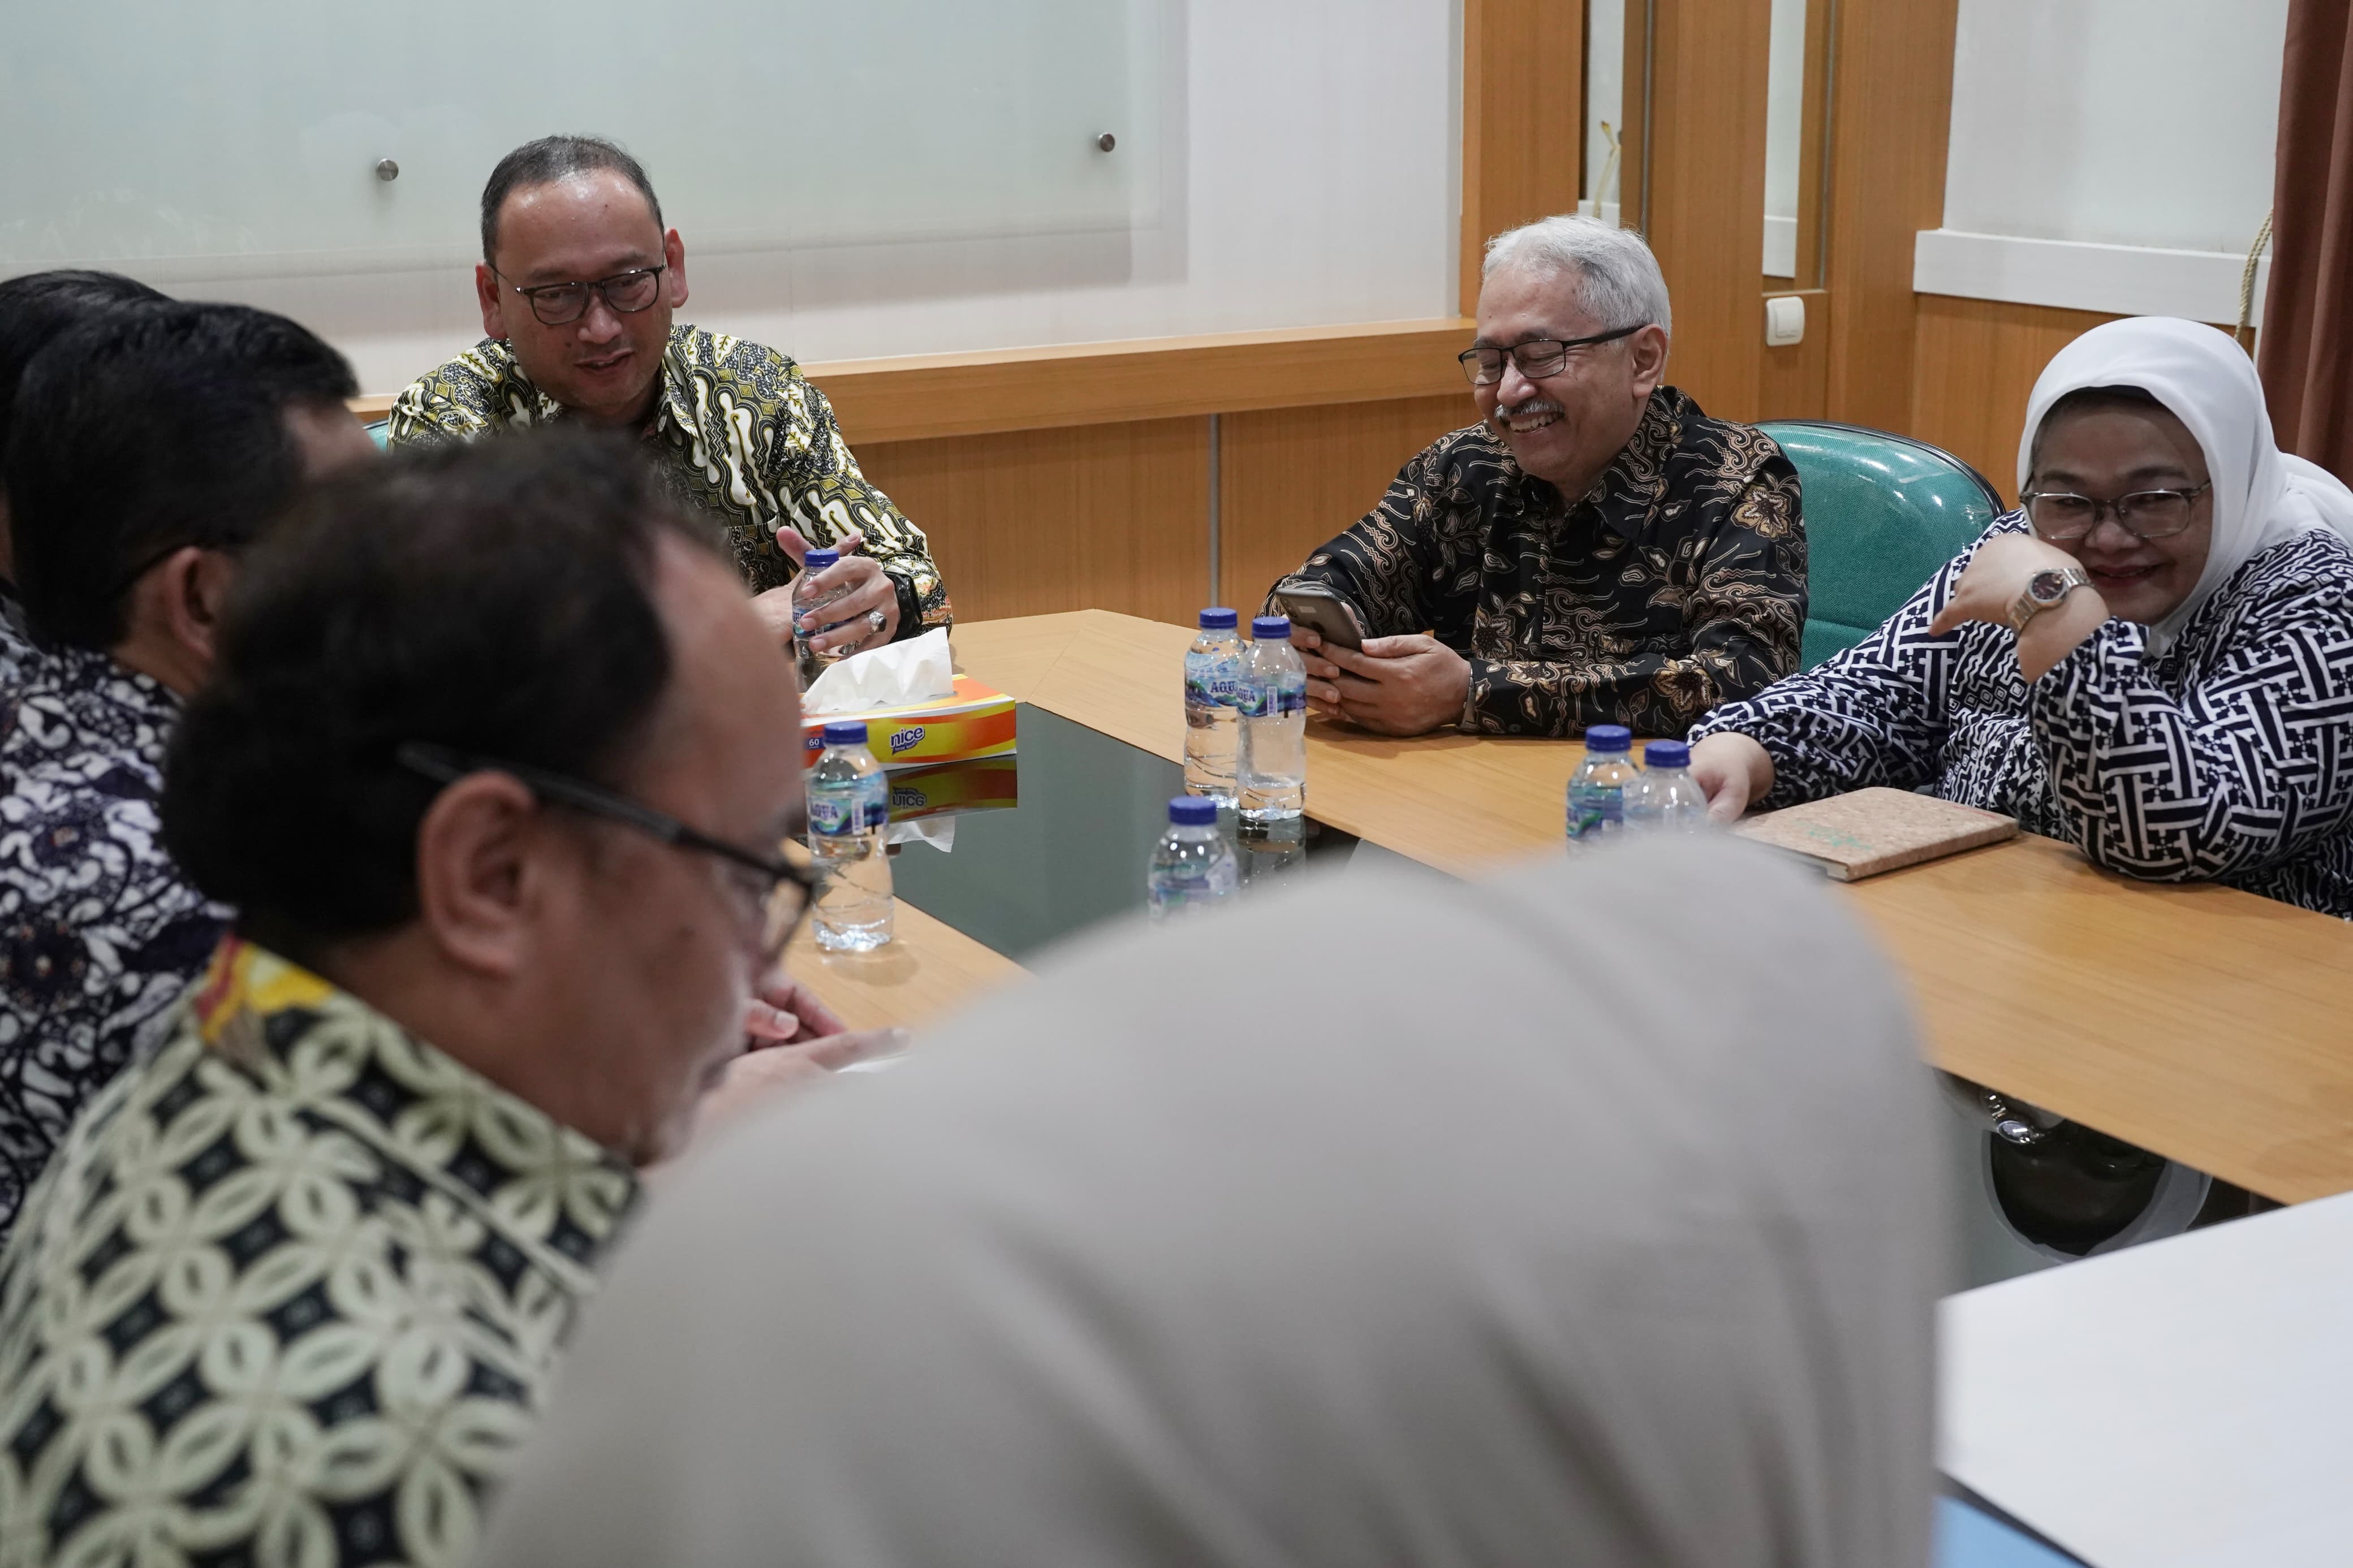 Meeting of the Secretary General of the MoSA and Poltekesos in Yogyakarta